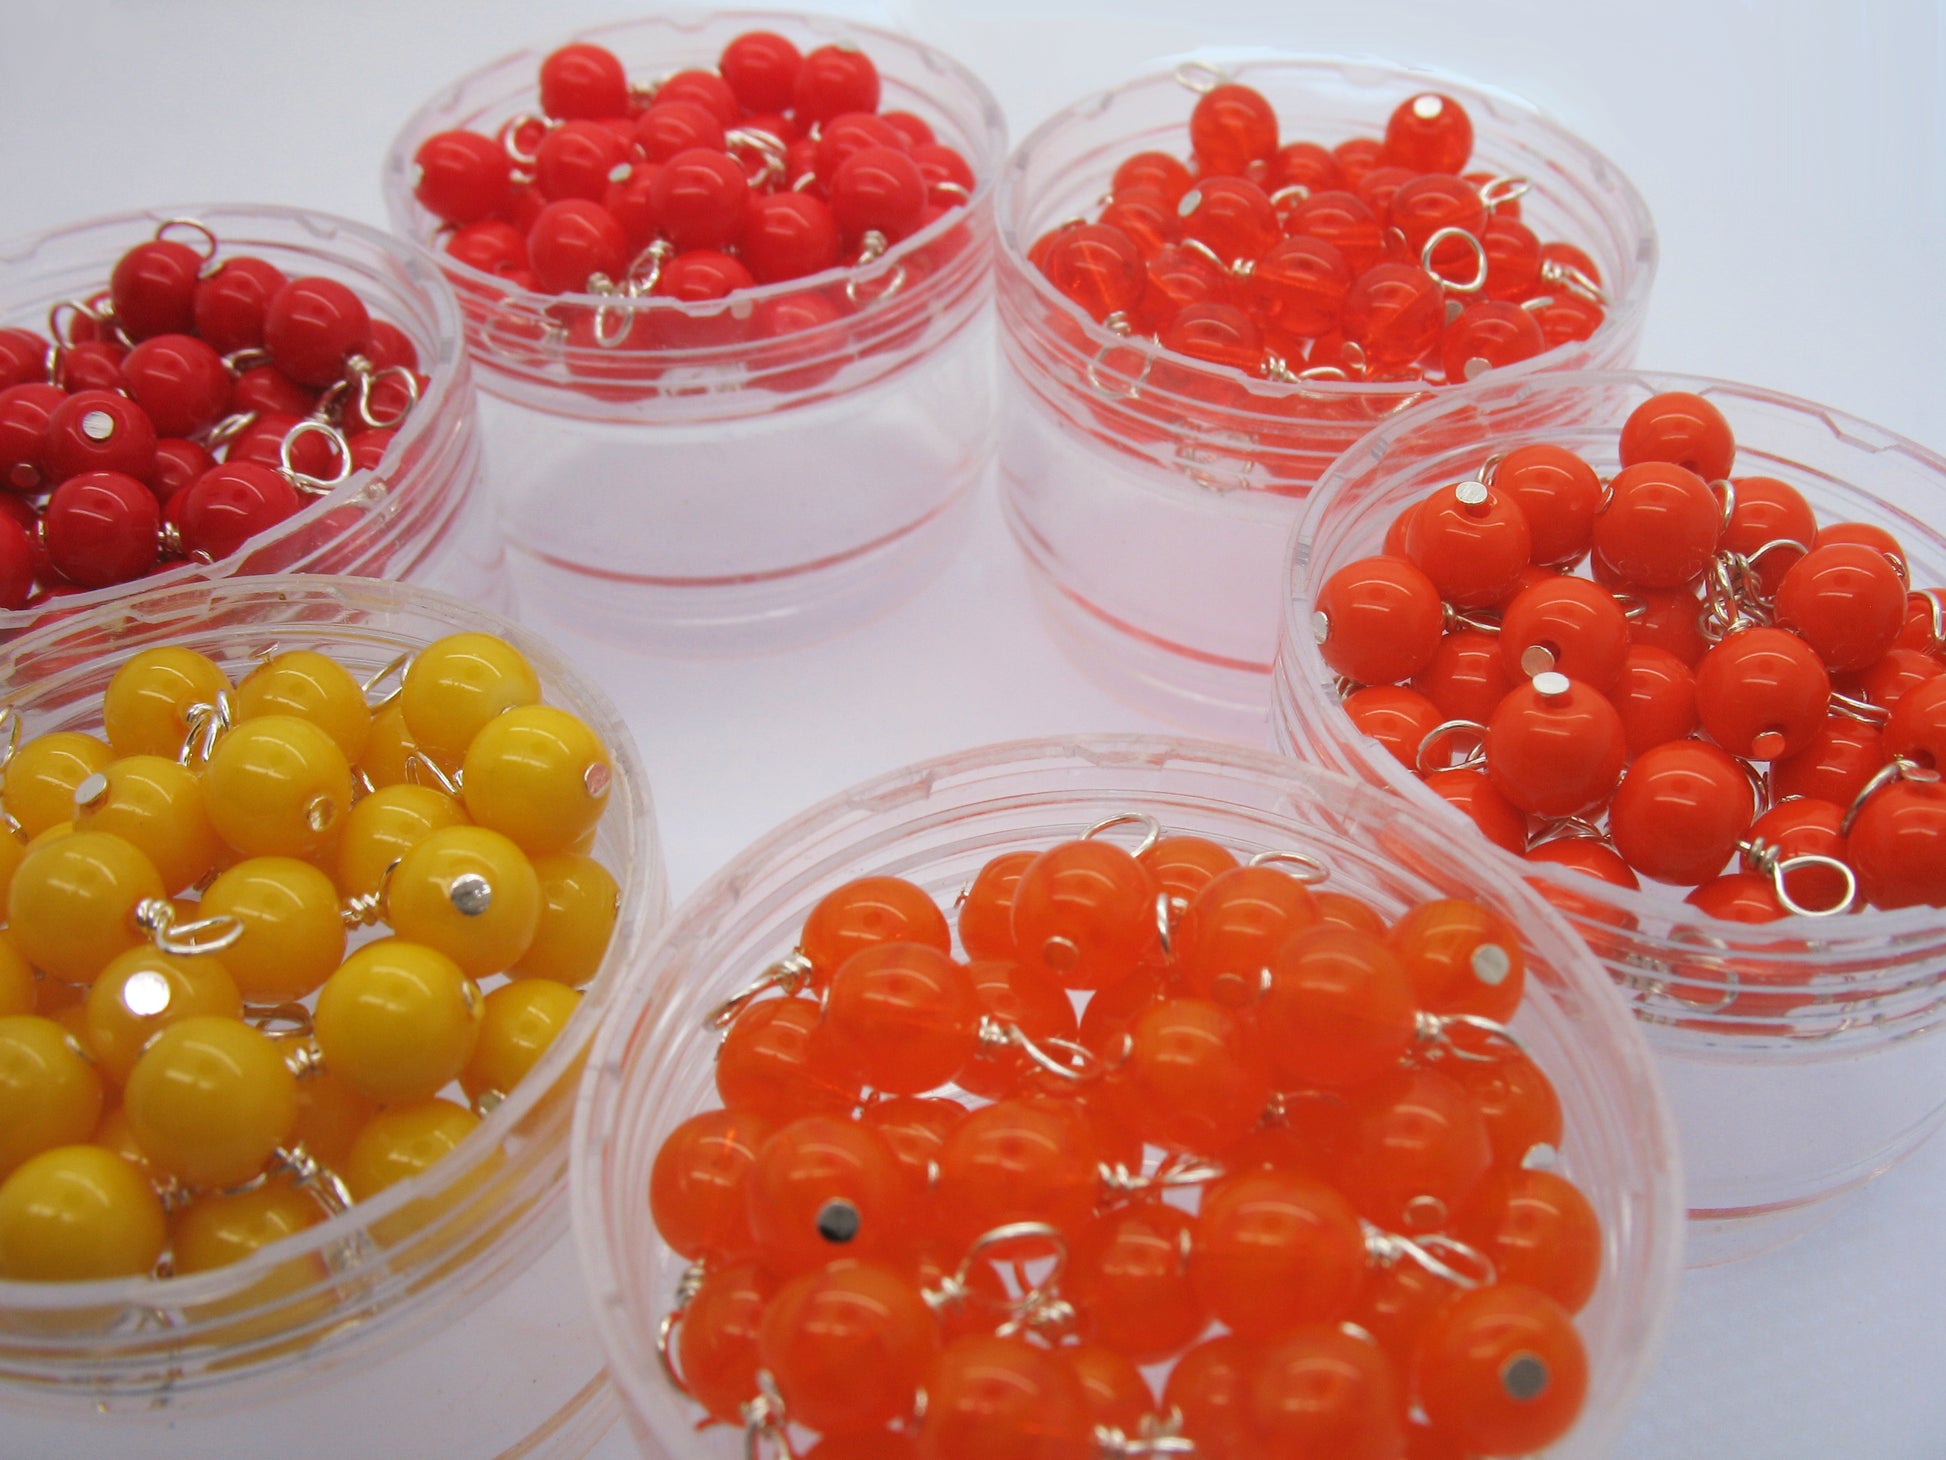 Rainbow Glass Bead Dangles - Bead Charms for Pride Jewelry - Adorabilities Charms & Trinkets